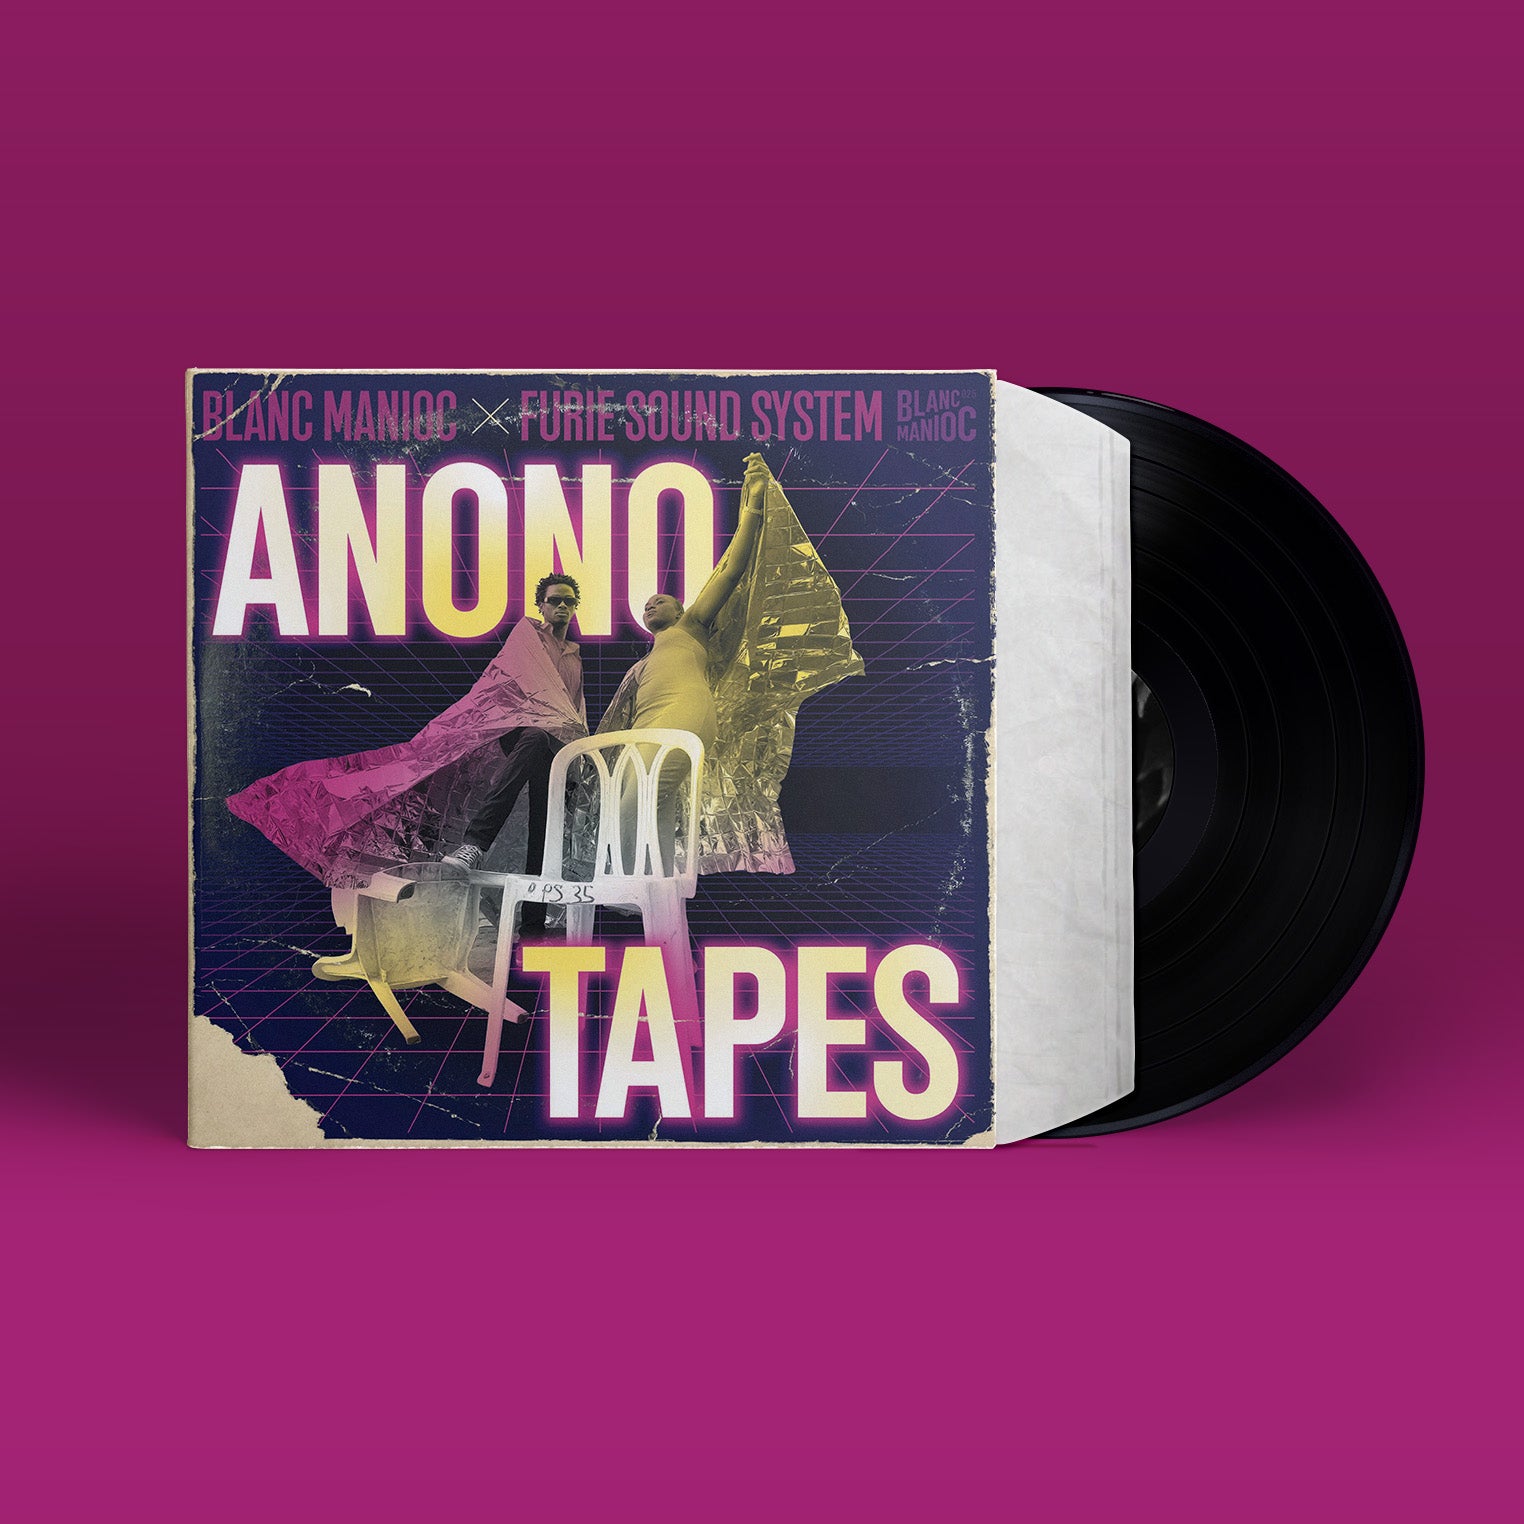 Blanc Manioc x Furie Sound System - Anono Tapes